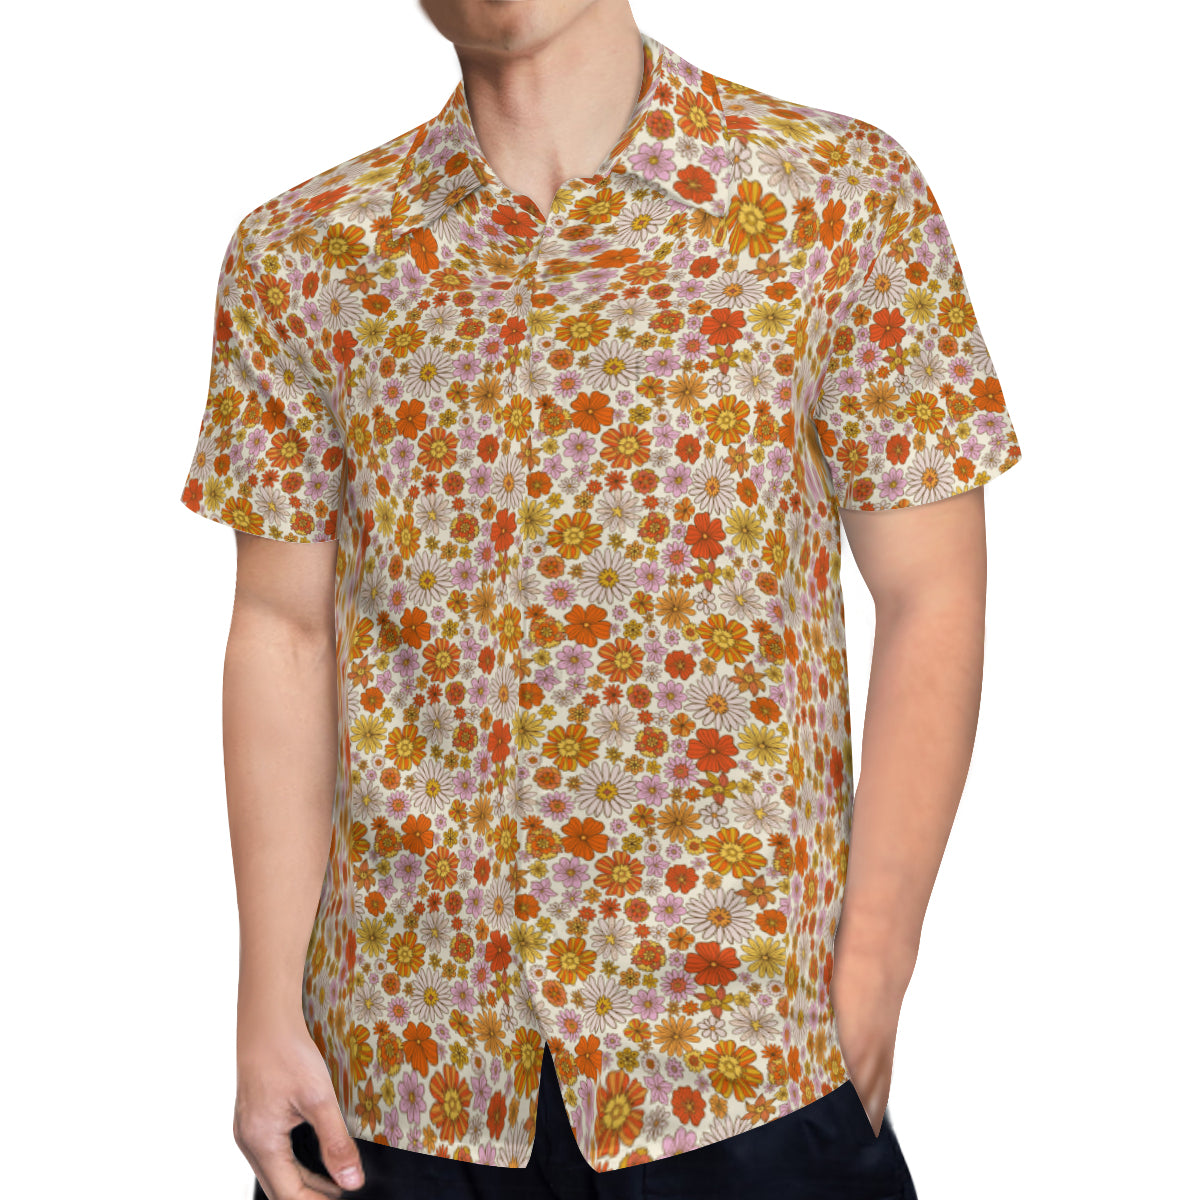 Vintage 70s style shirt, Retro Shirt Men, Hippie Shirt Men, Men's Floral shirt, 70s Shirt Men, 70s inspired shirt, Men's dress shirt